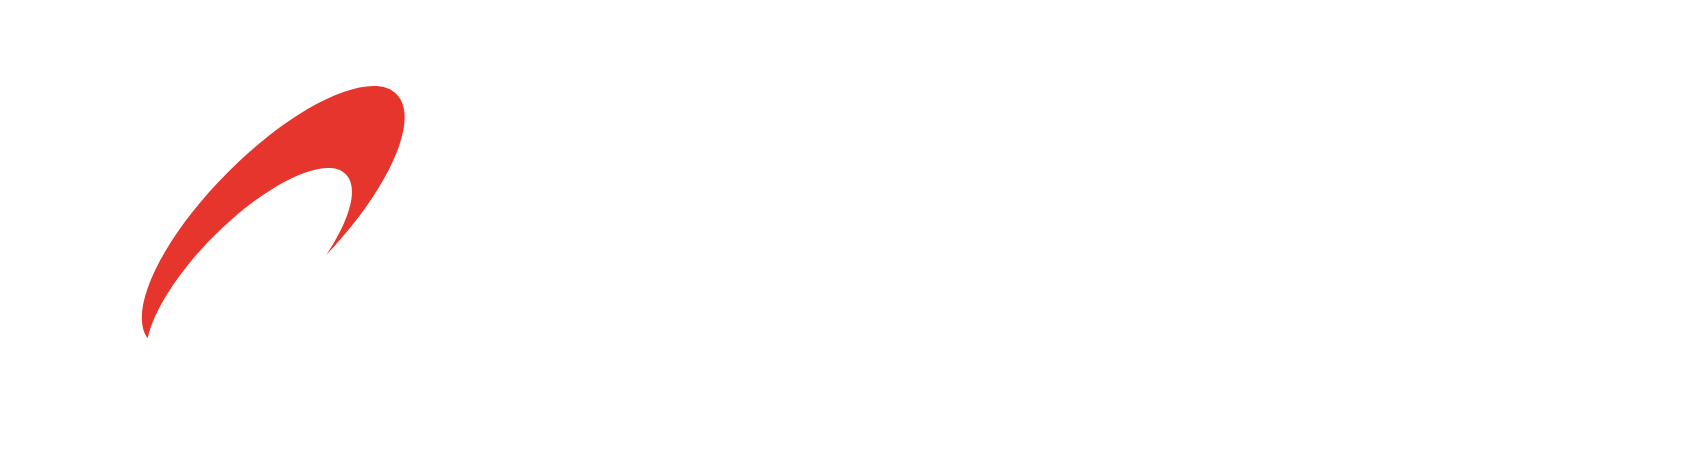 Mainova logo large for dark backgrounds (transparent PNG)